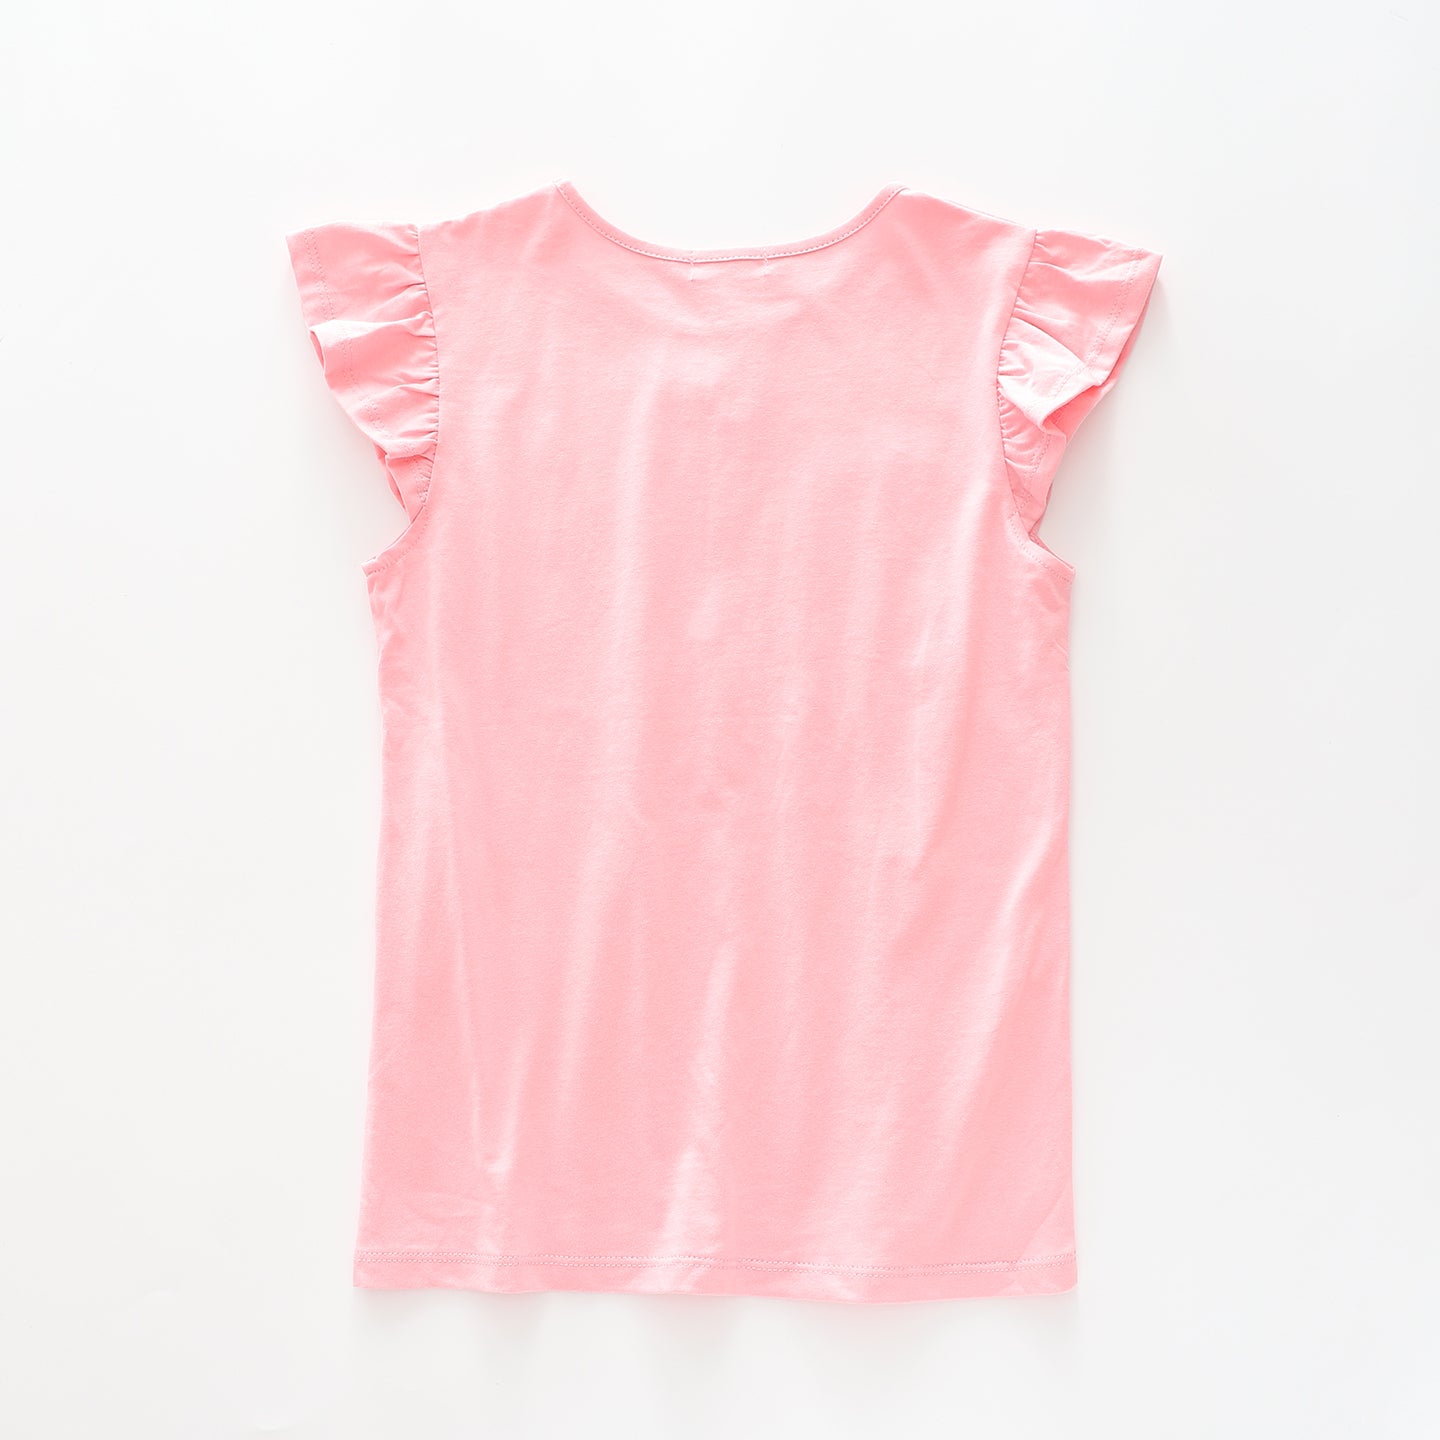 Girl's Baby Pink Sequined Lovebird T-Shirt